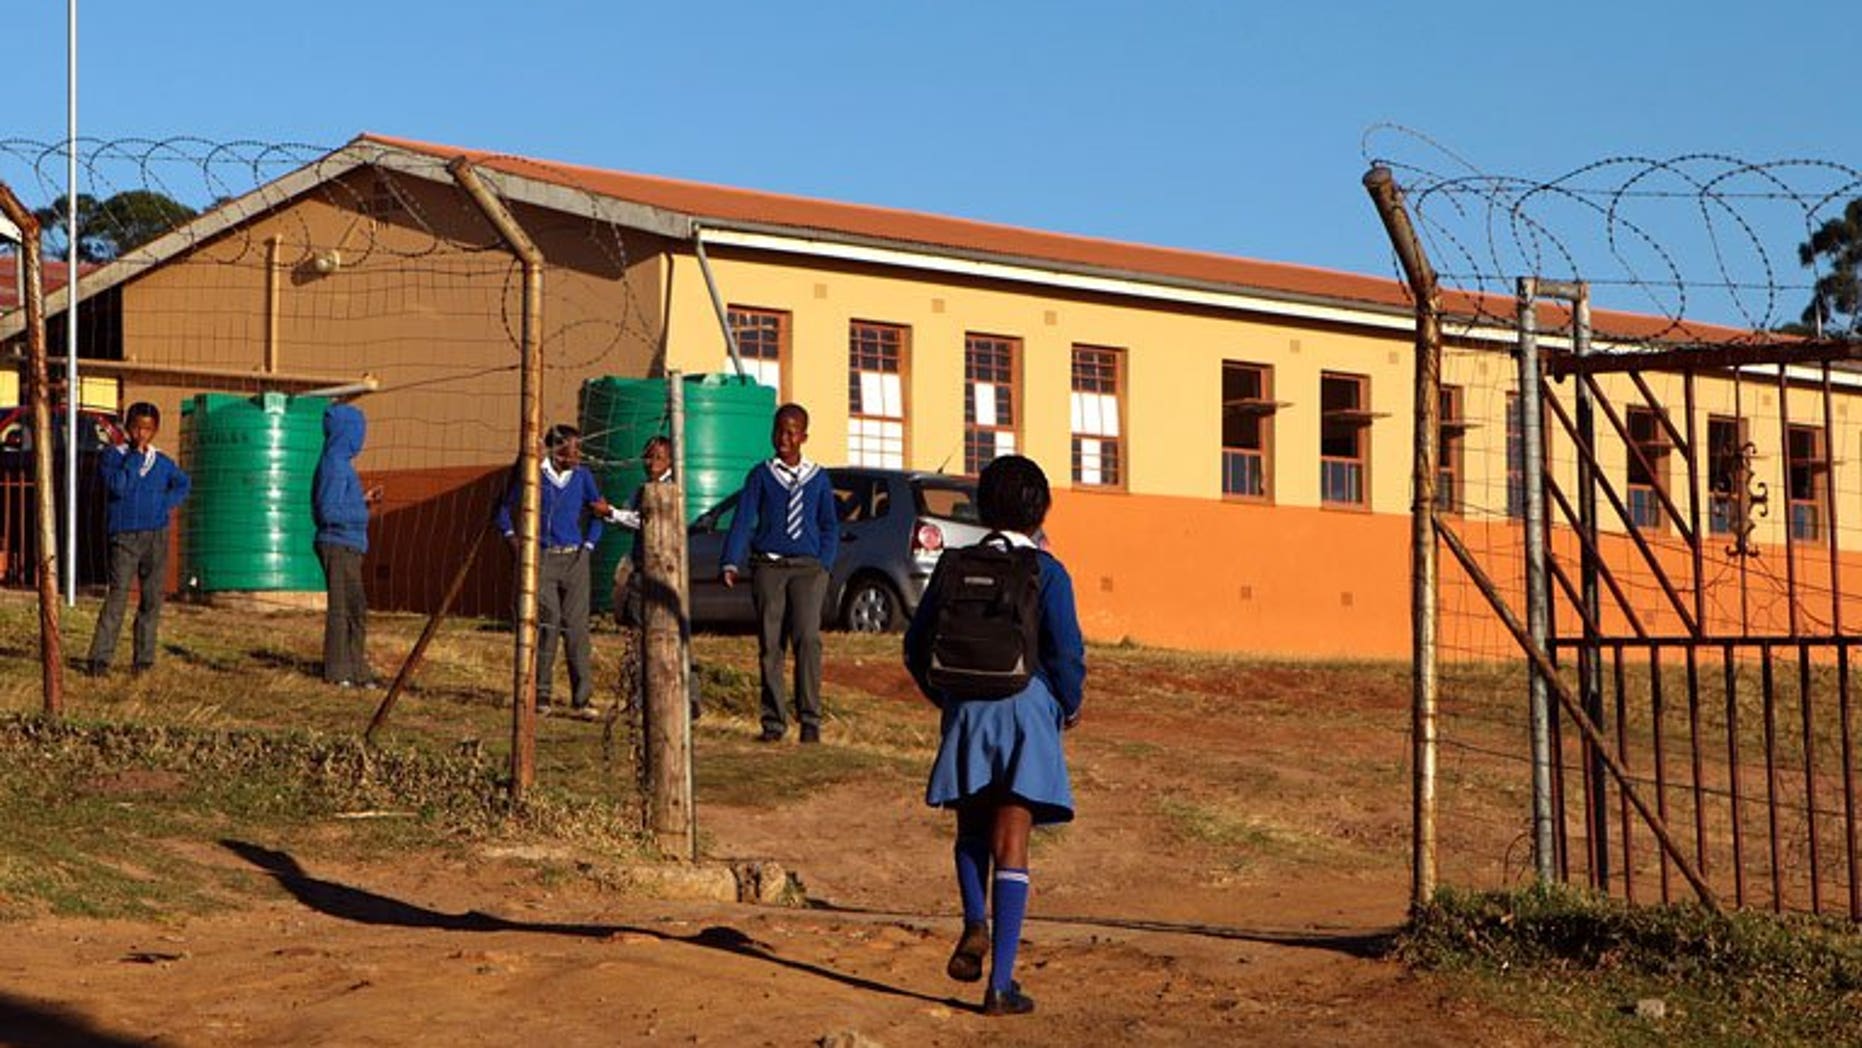 School Six - SAfrica arrests six in global child porn probe | Fox News